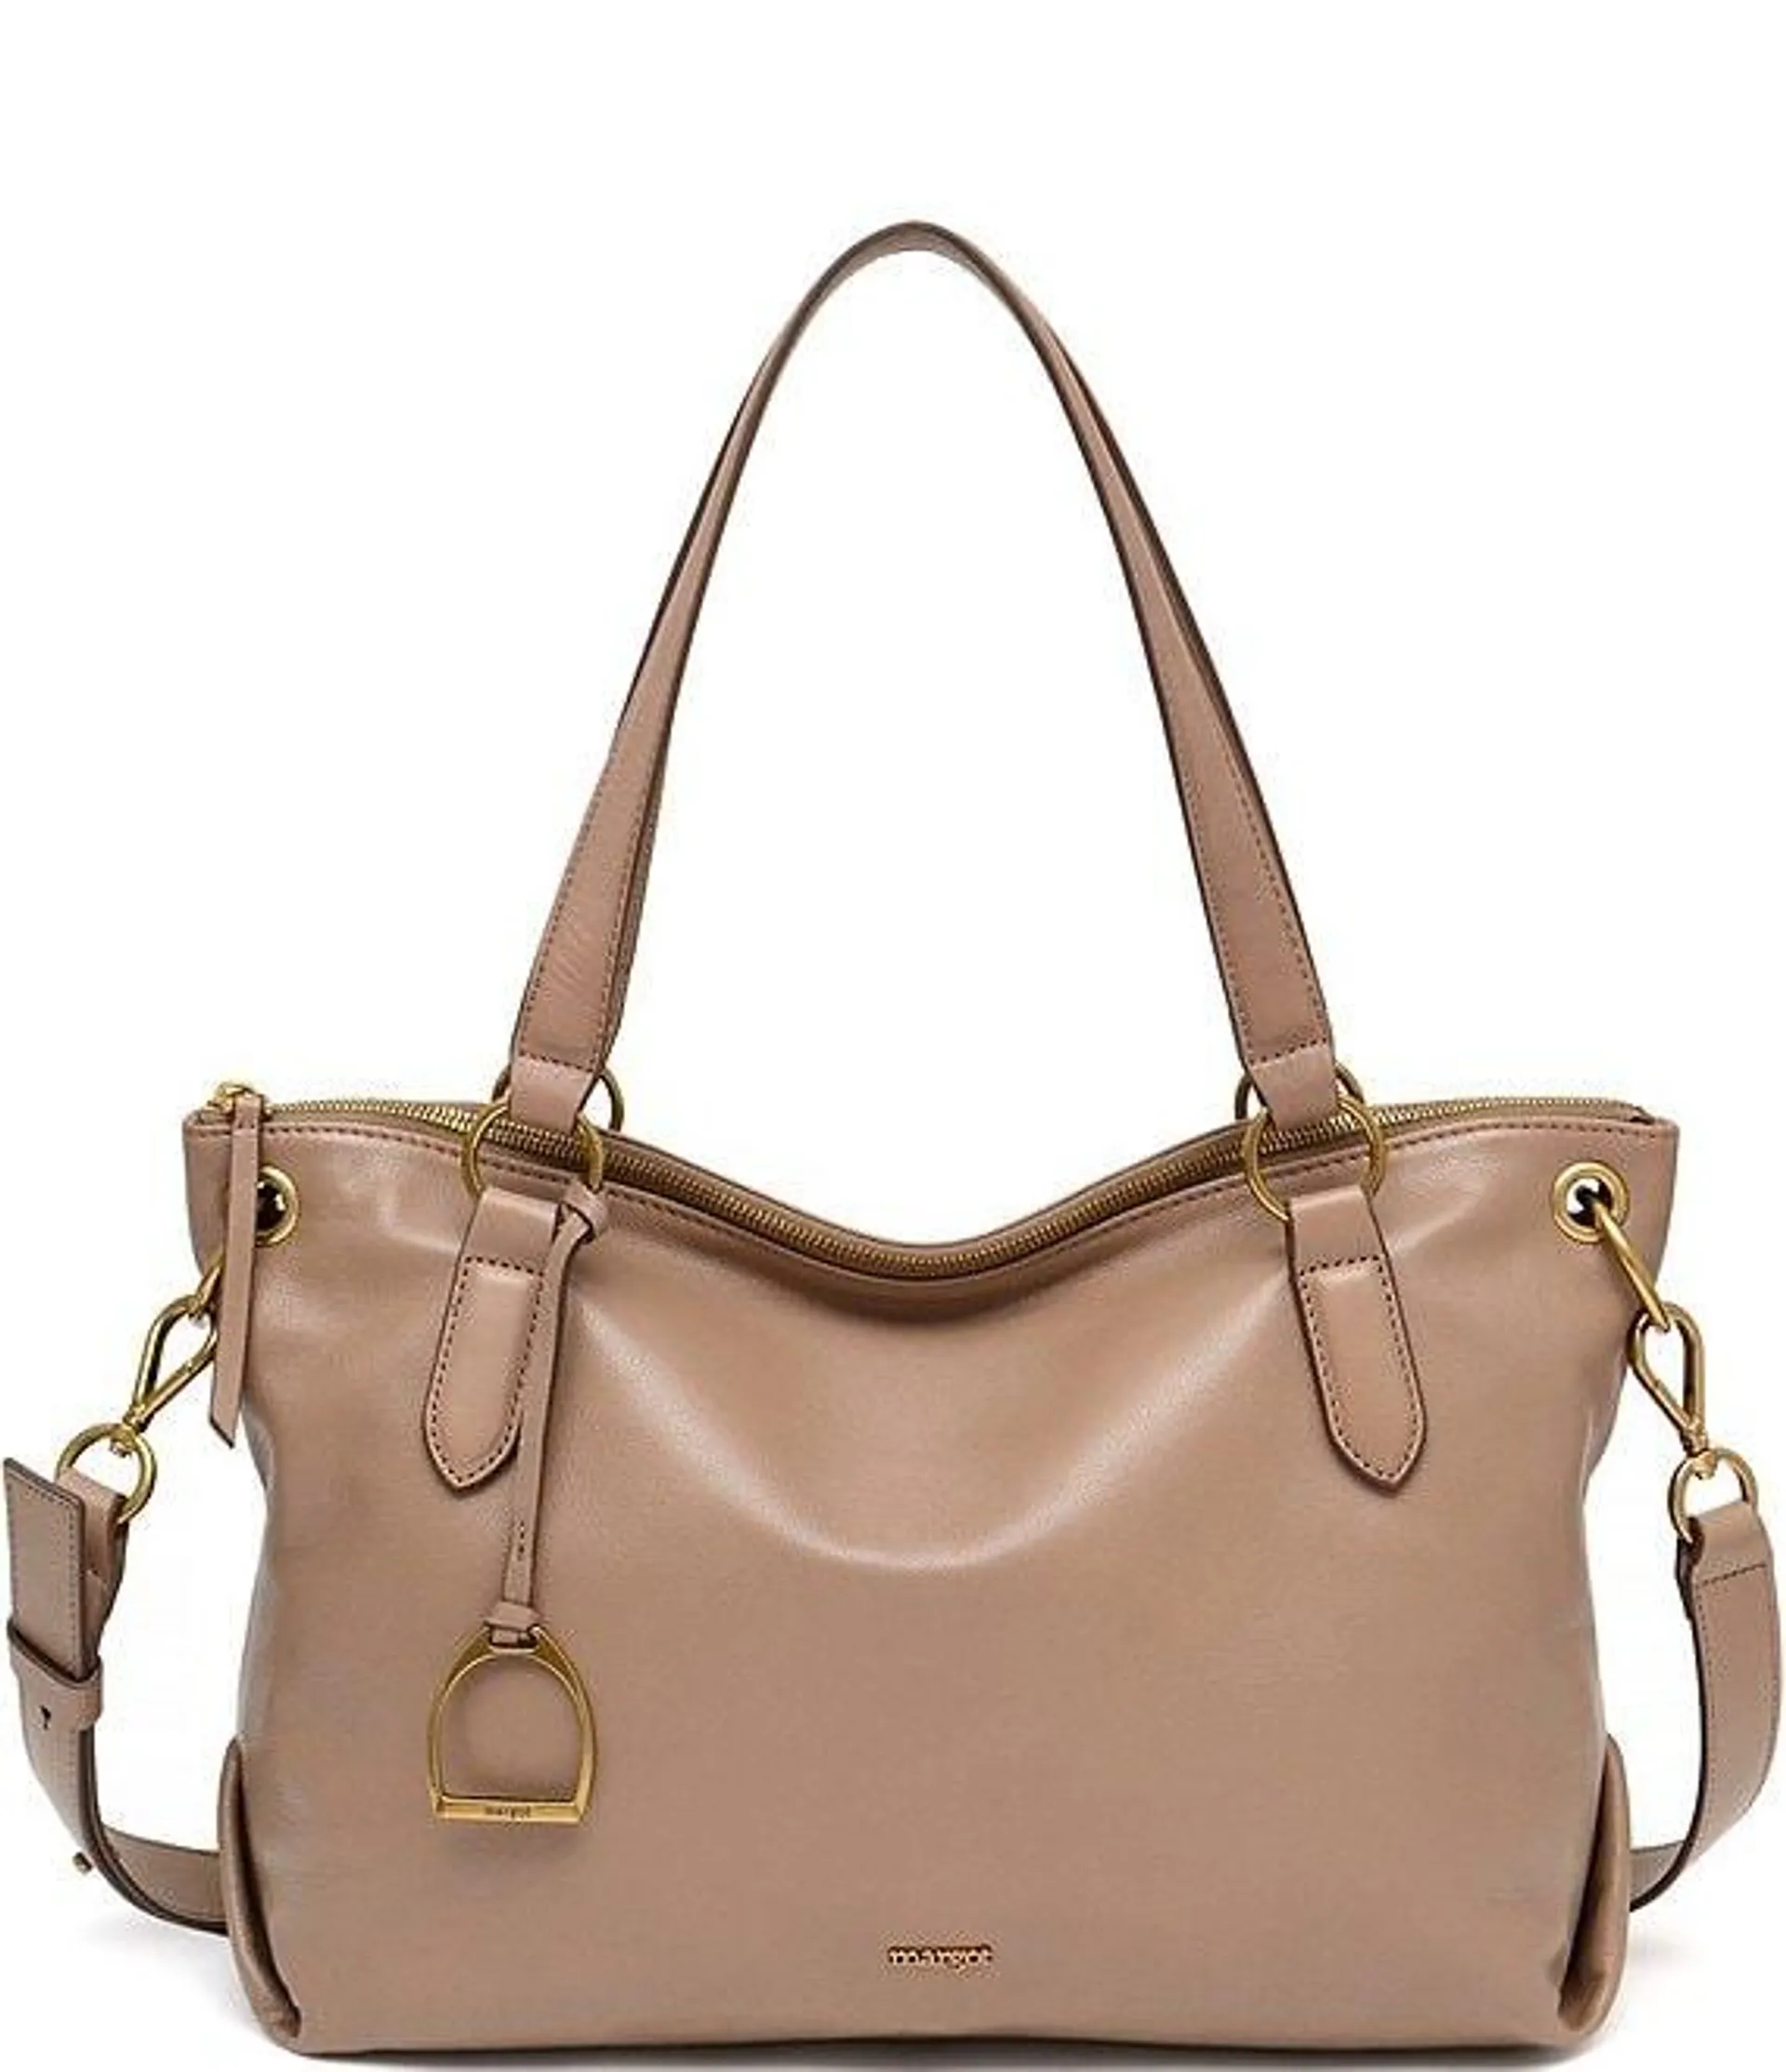 Maria Leather Satchel Bag